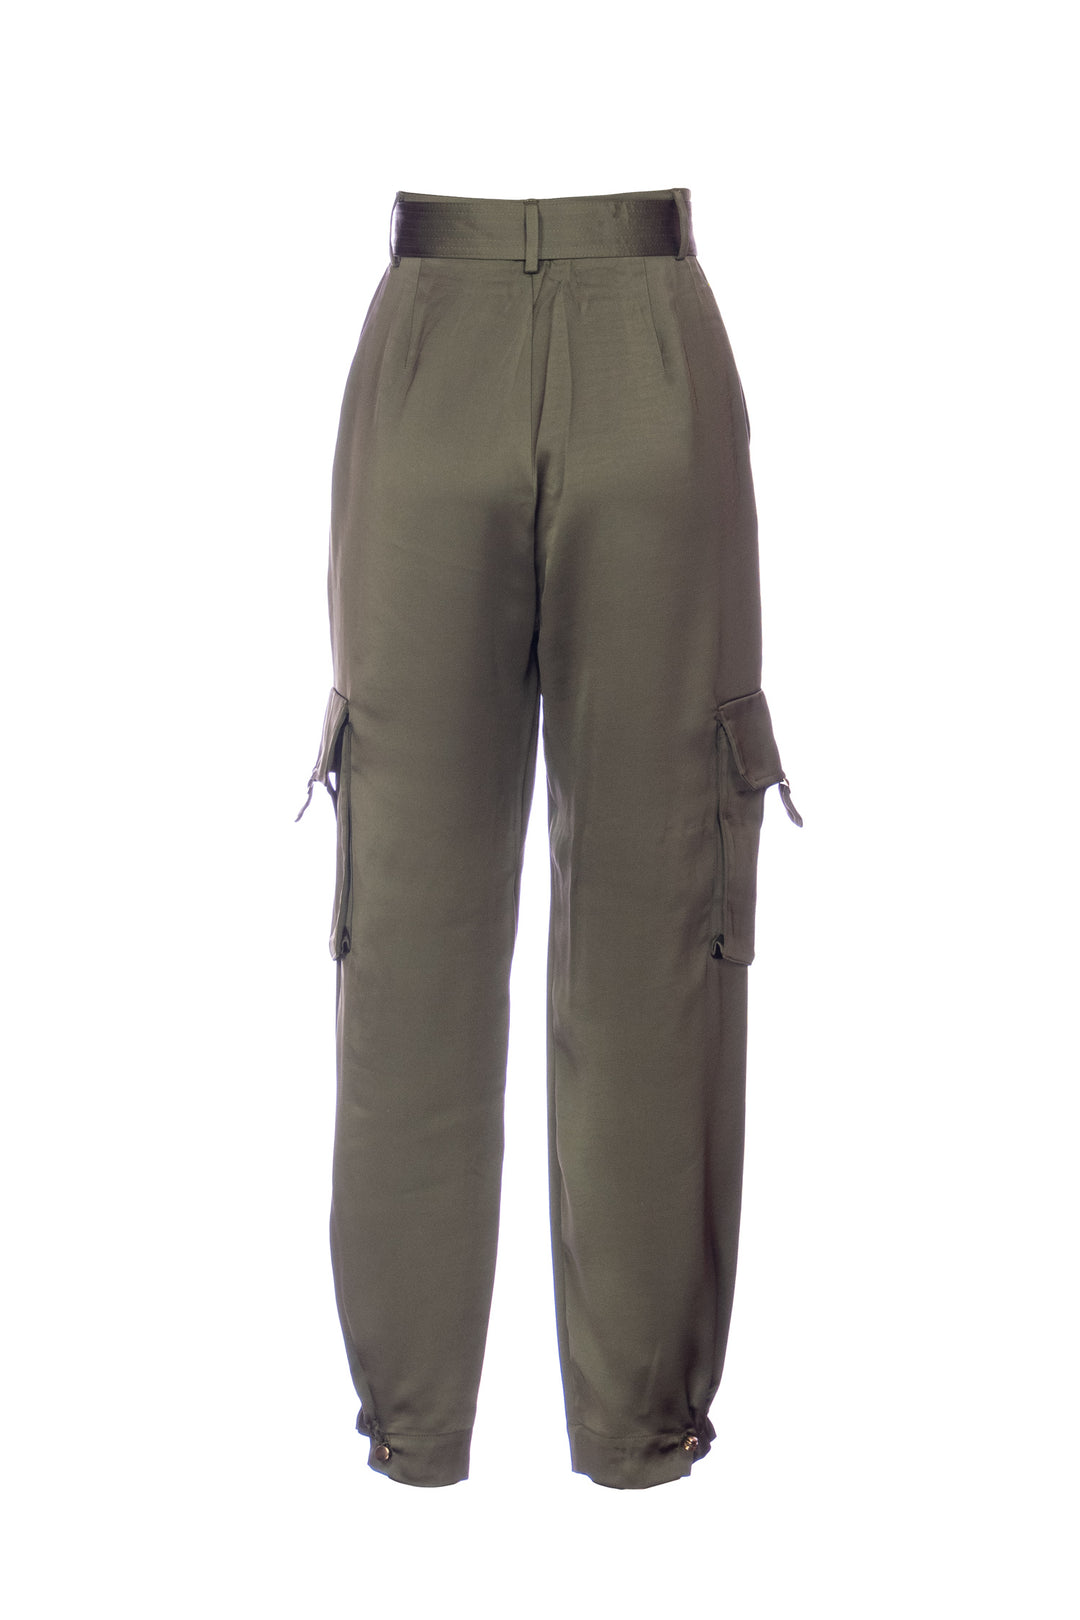 NENETTE Pantalone cargo “ERMAL” camouflage in raso con cintura - Mancinelli 1954